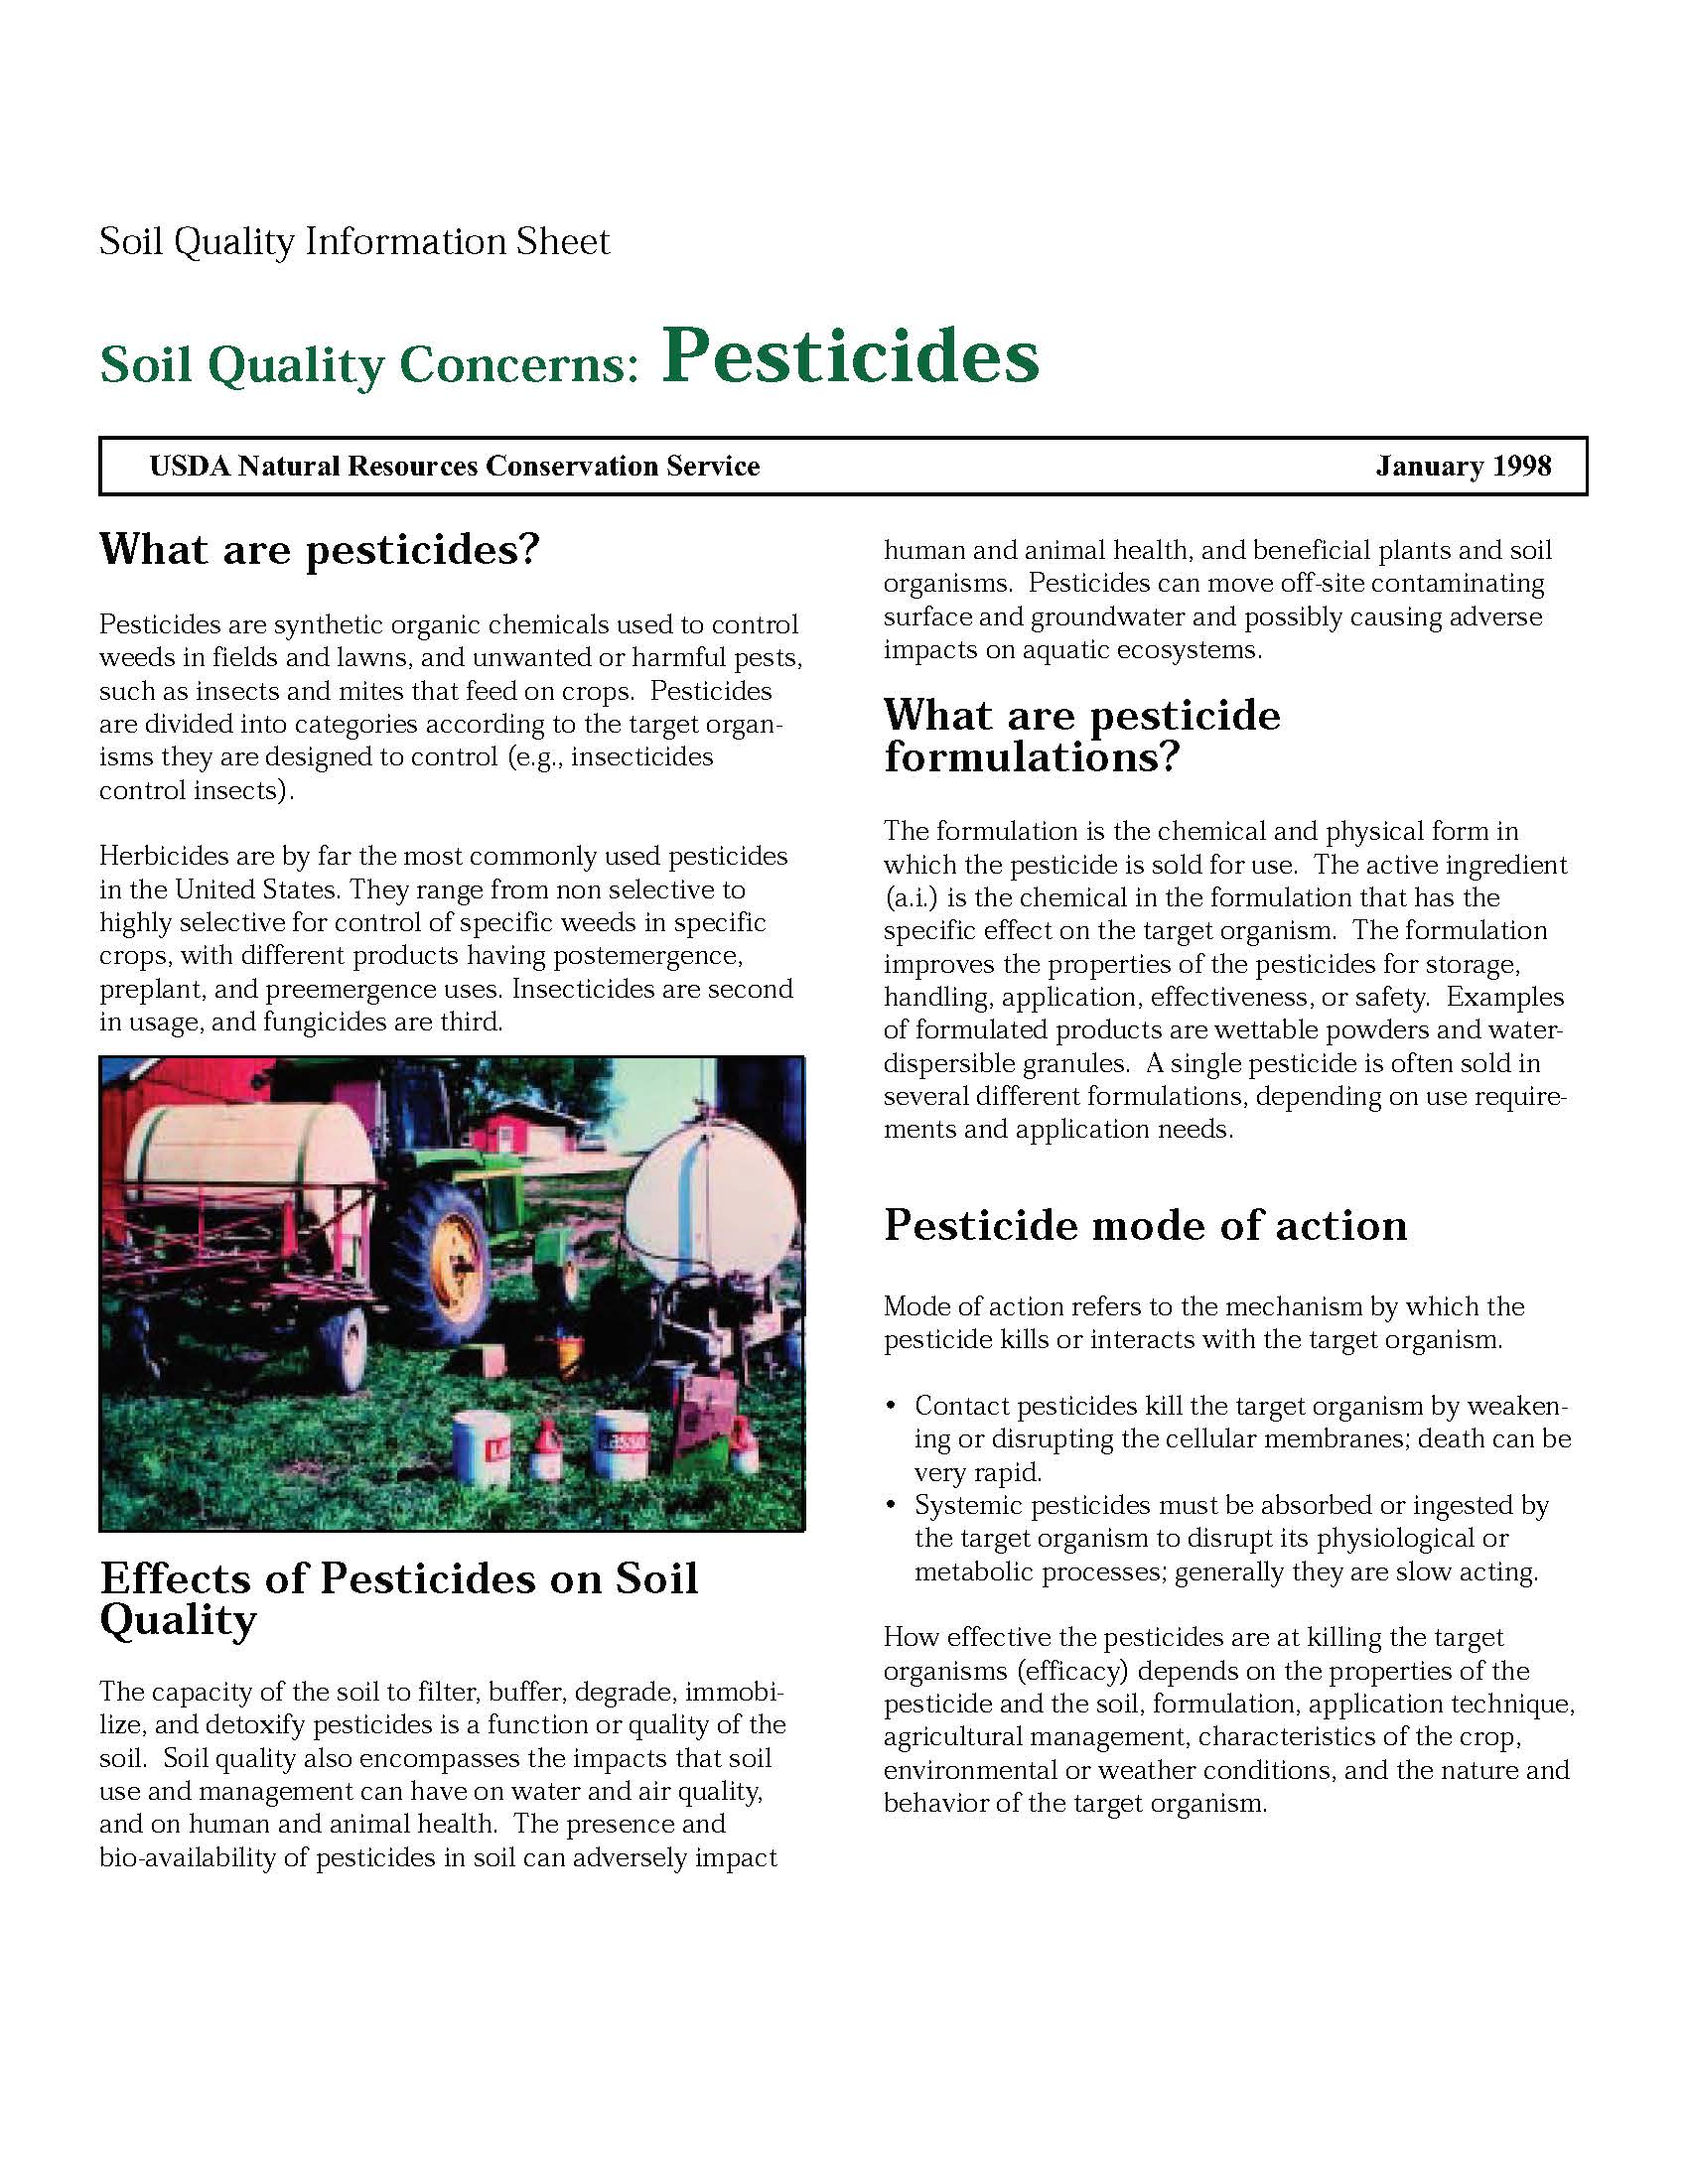 SQ-Resource Concerns-Pesticides